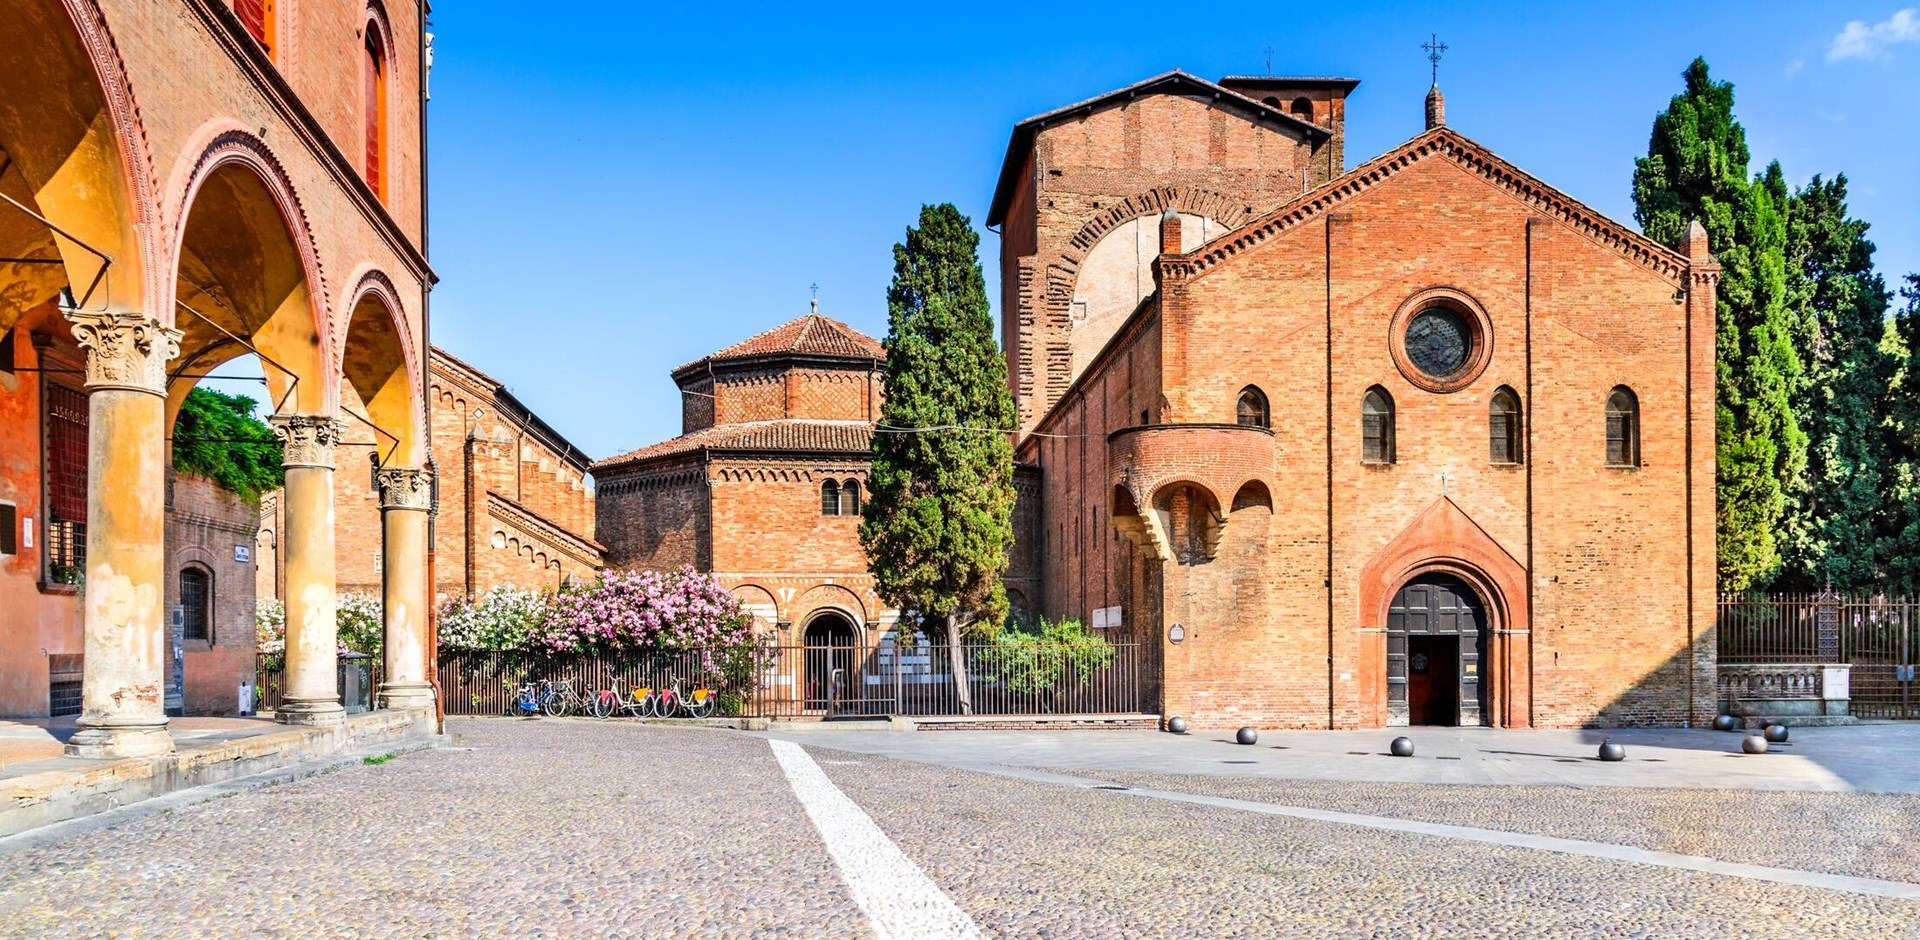 Bologna, Italy - The basilica of Santo Stefano, Holy Jerusalem, known as Seven Churches. Emilia-Romagna region.